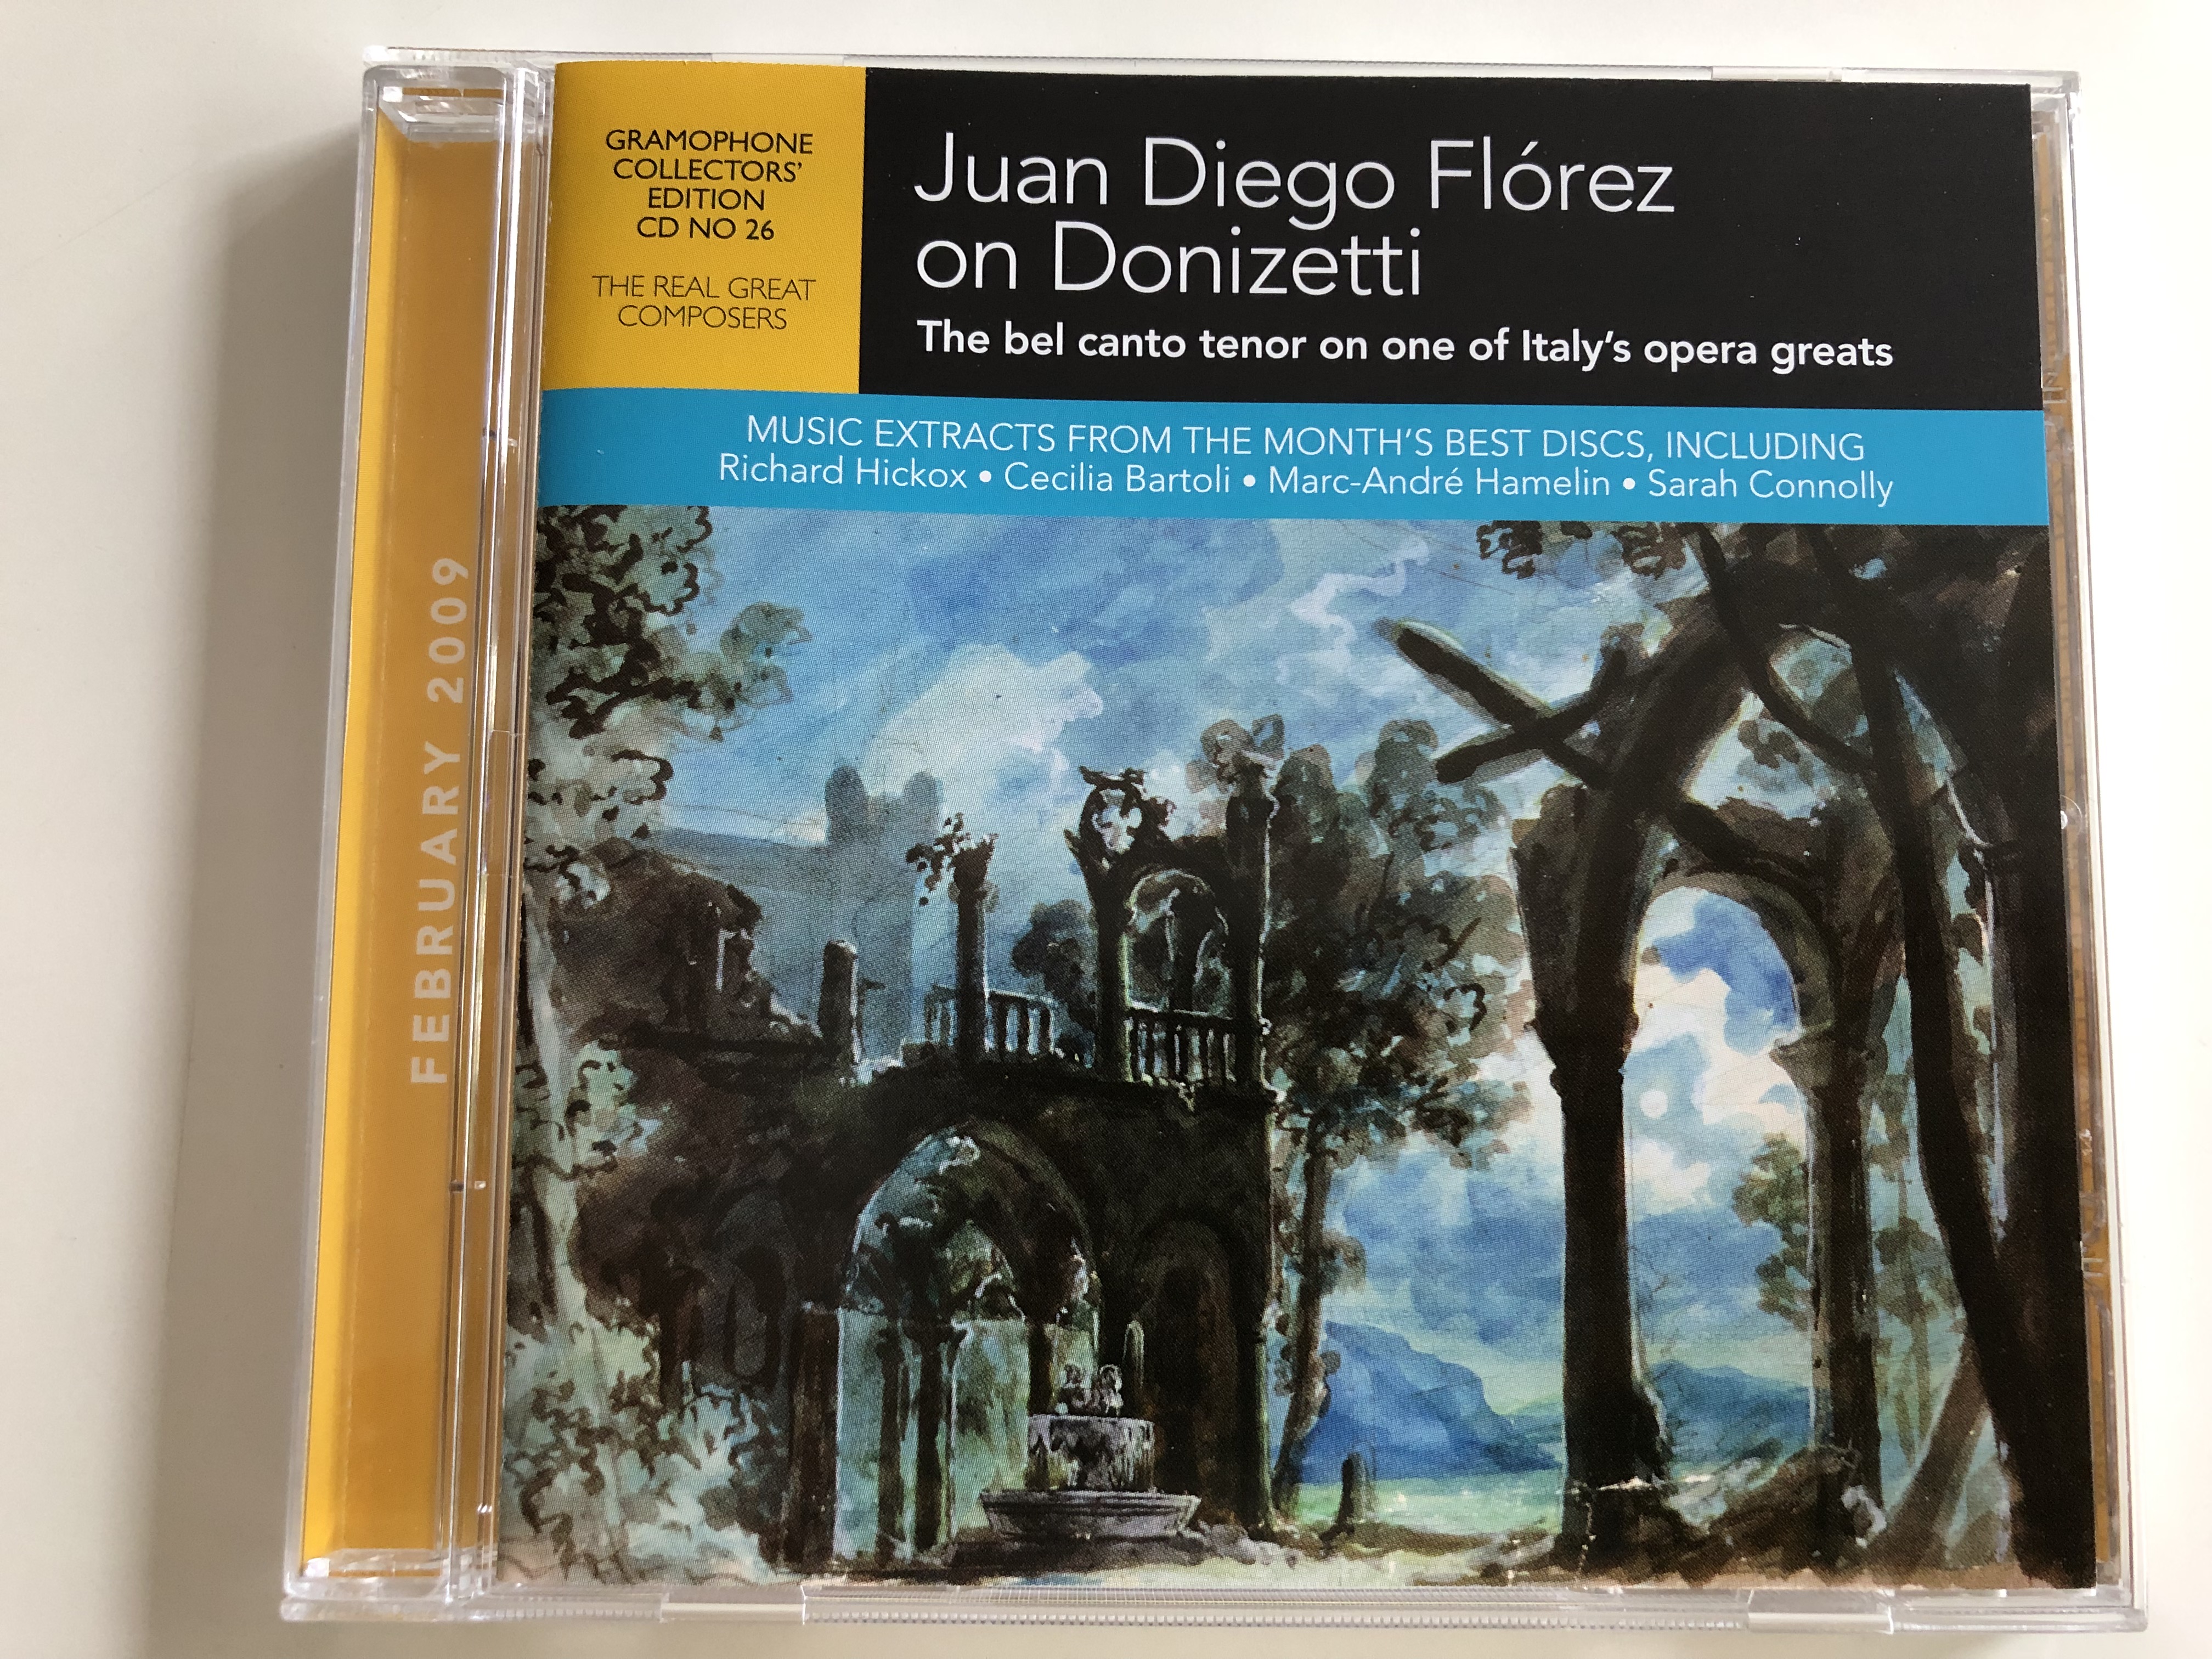 juan-diego-florez-on-donizetti-the-bel-canto-tenor-on-one-of-italy-s-opera-greats-february-2009-gramophone-audio-cd-2009-gcd0209-1-.jpg